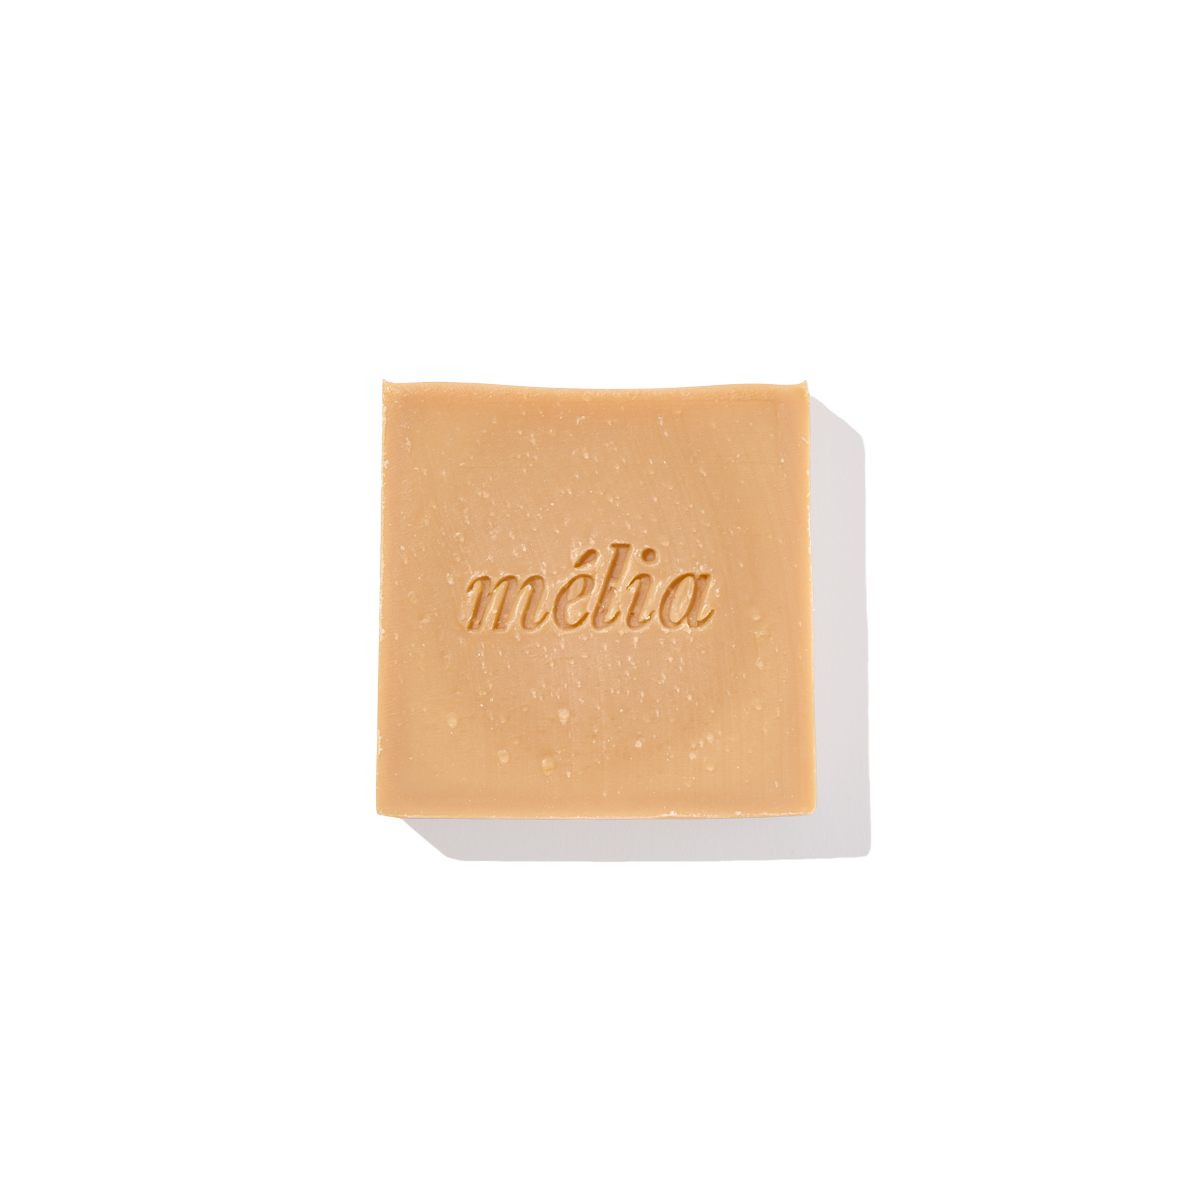 Savon artisanal Melia - Mandarine + Vanille 100g